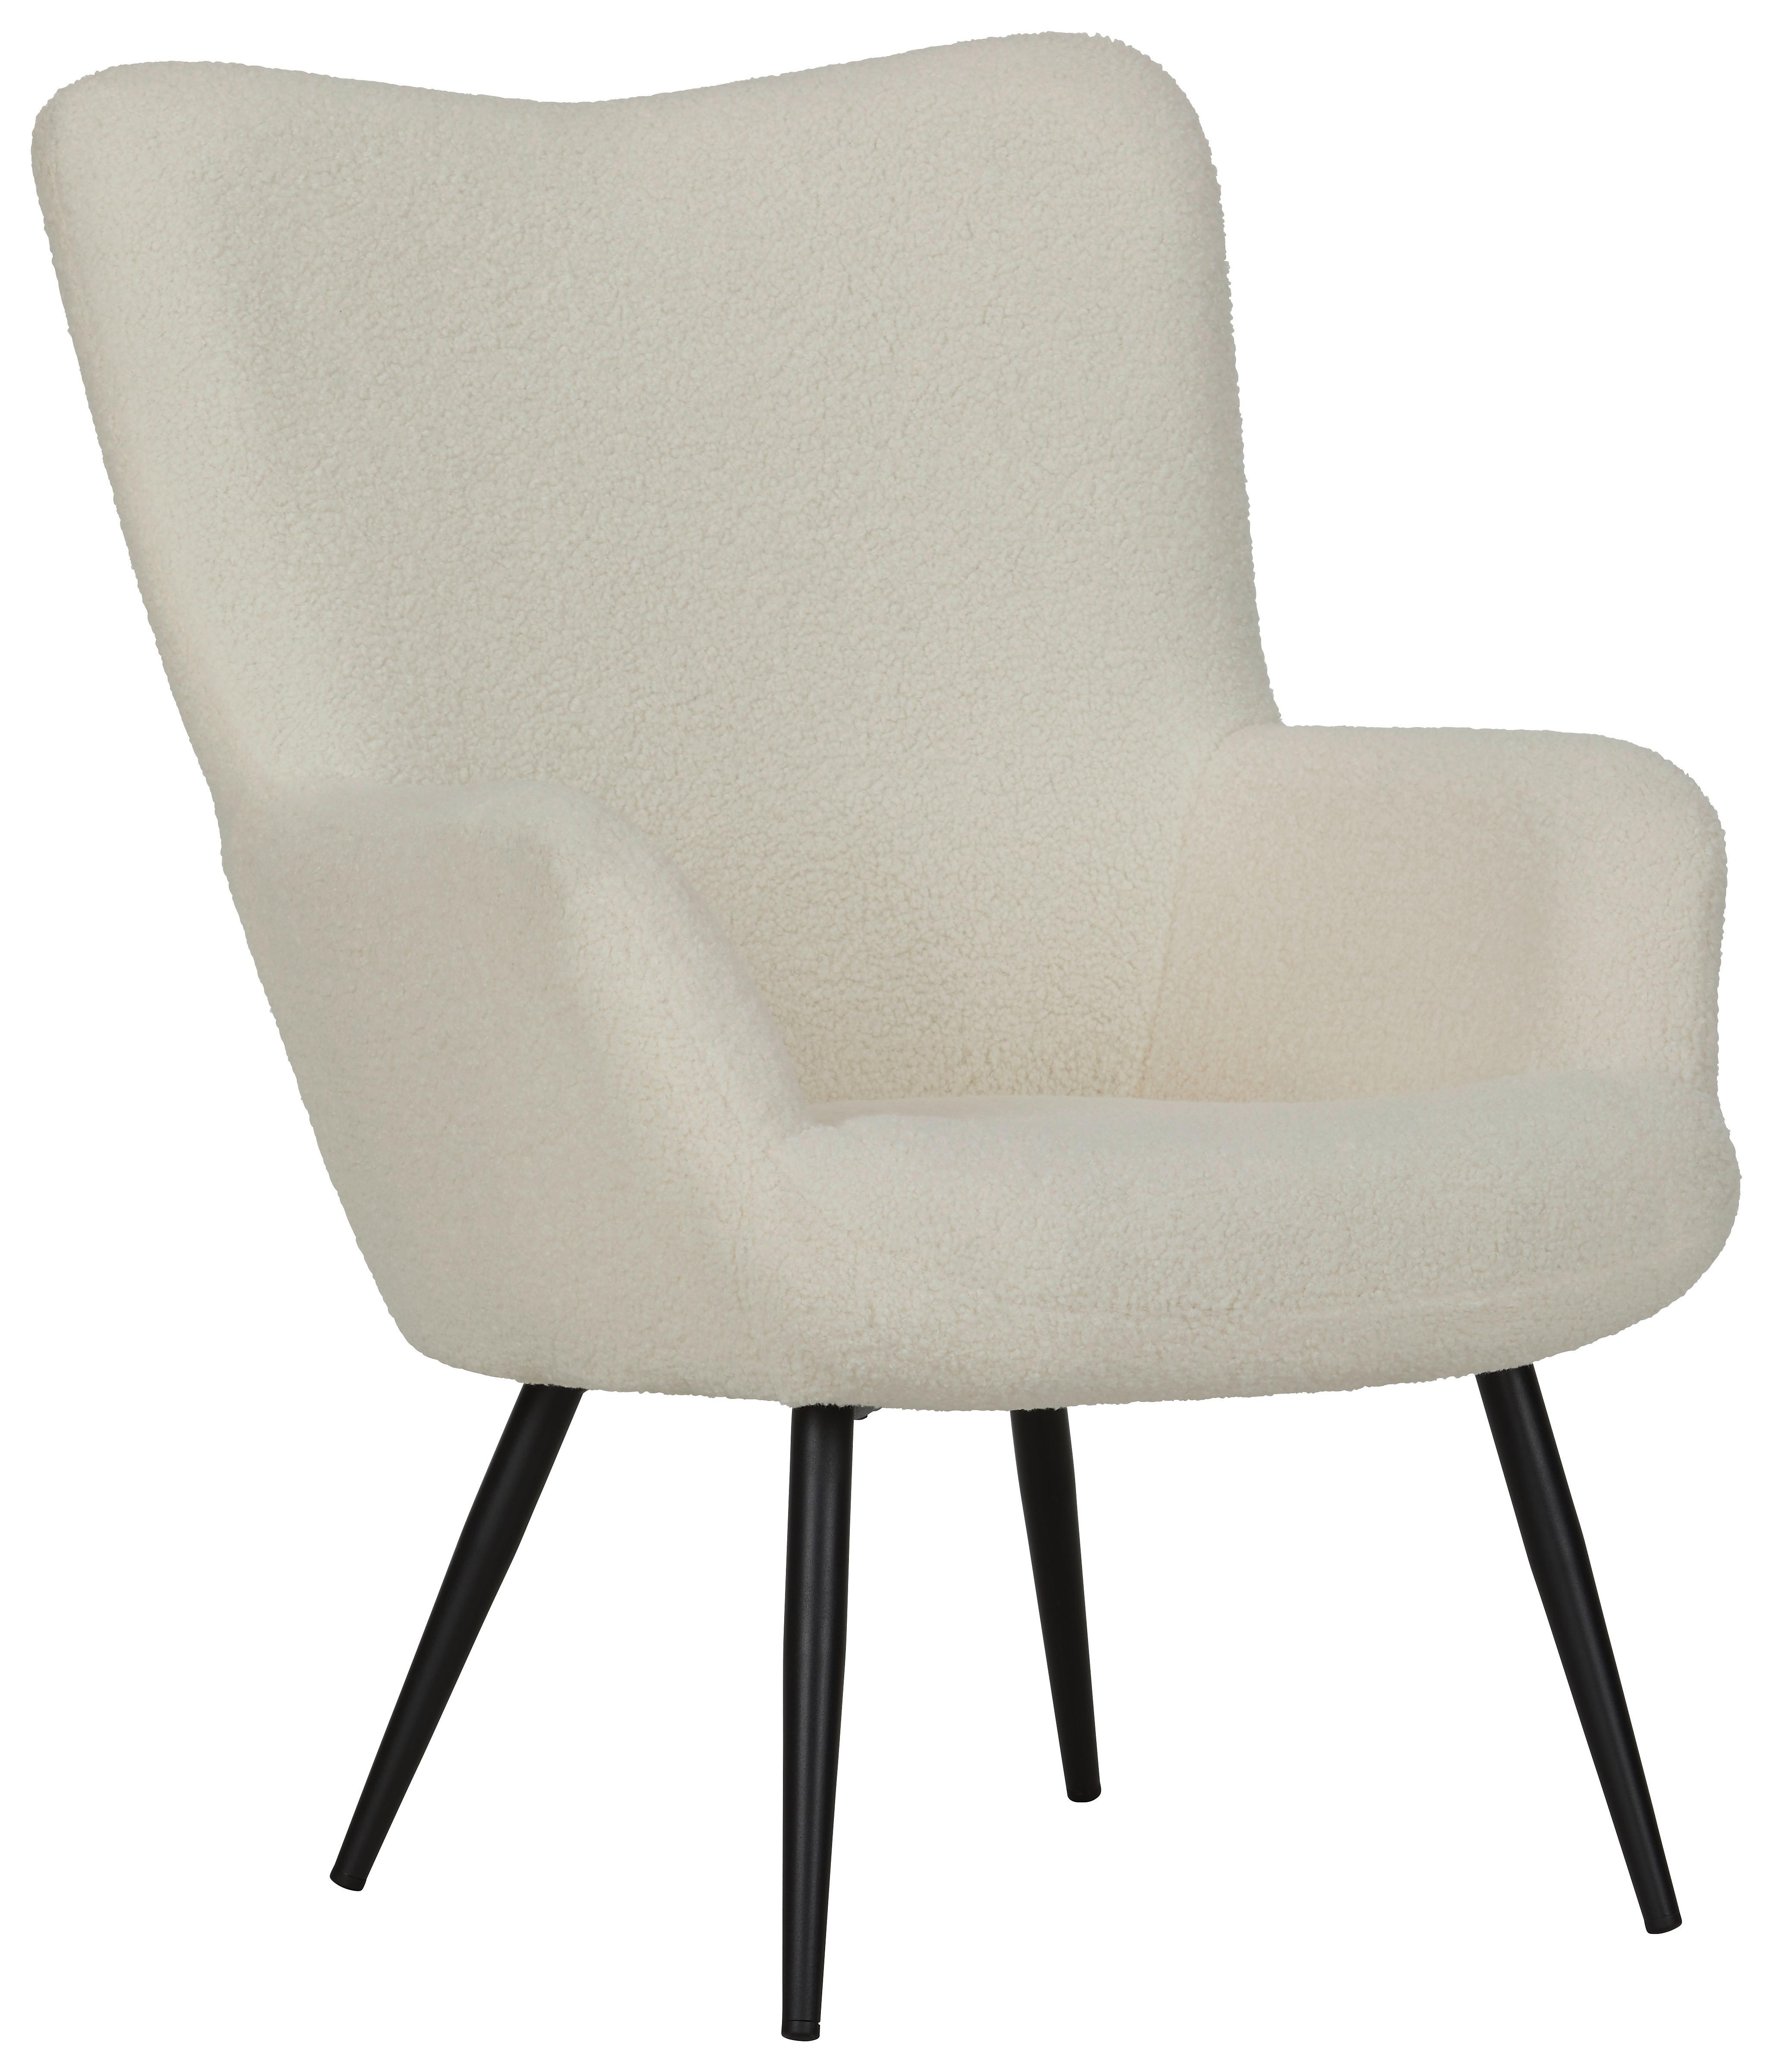 Relax-fotel Gunvor - Fehér, modern, Fém/Textil (73/97/80cm) - Modern Living